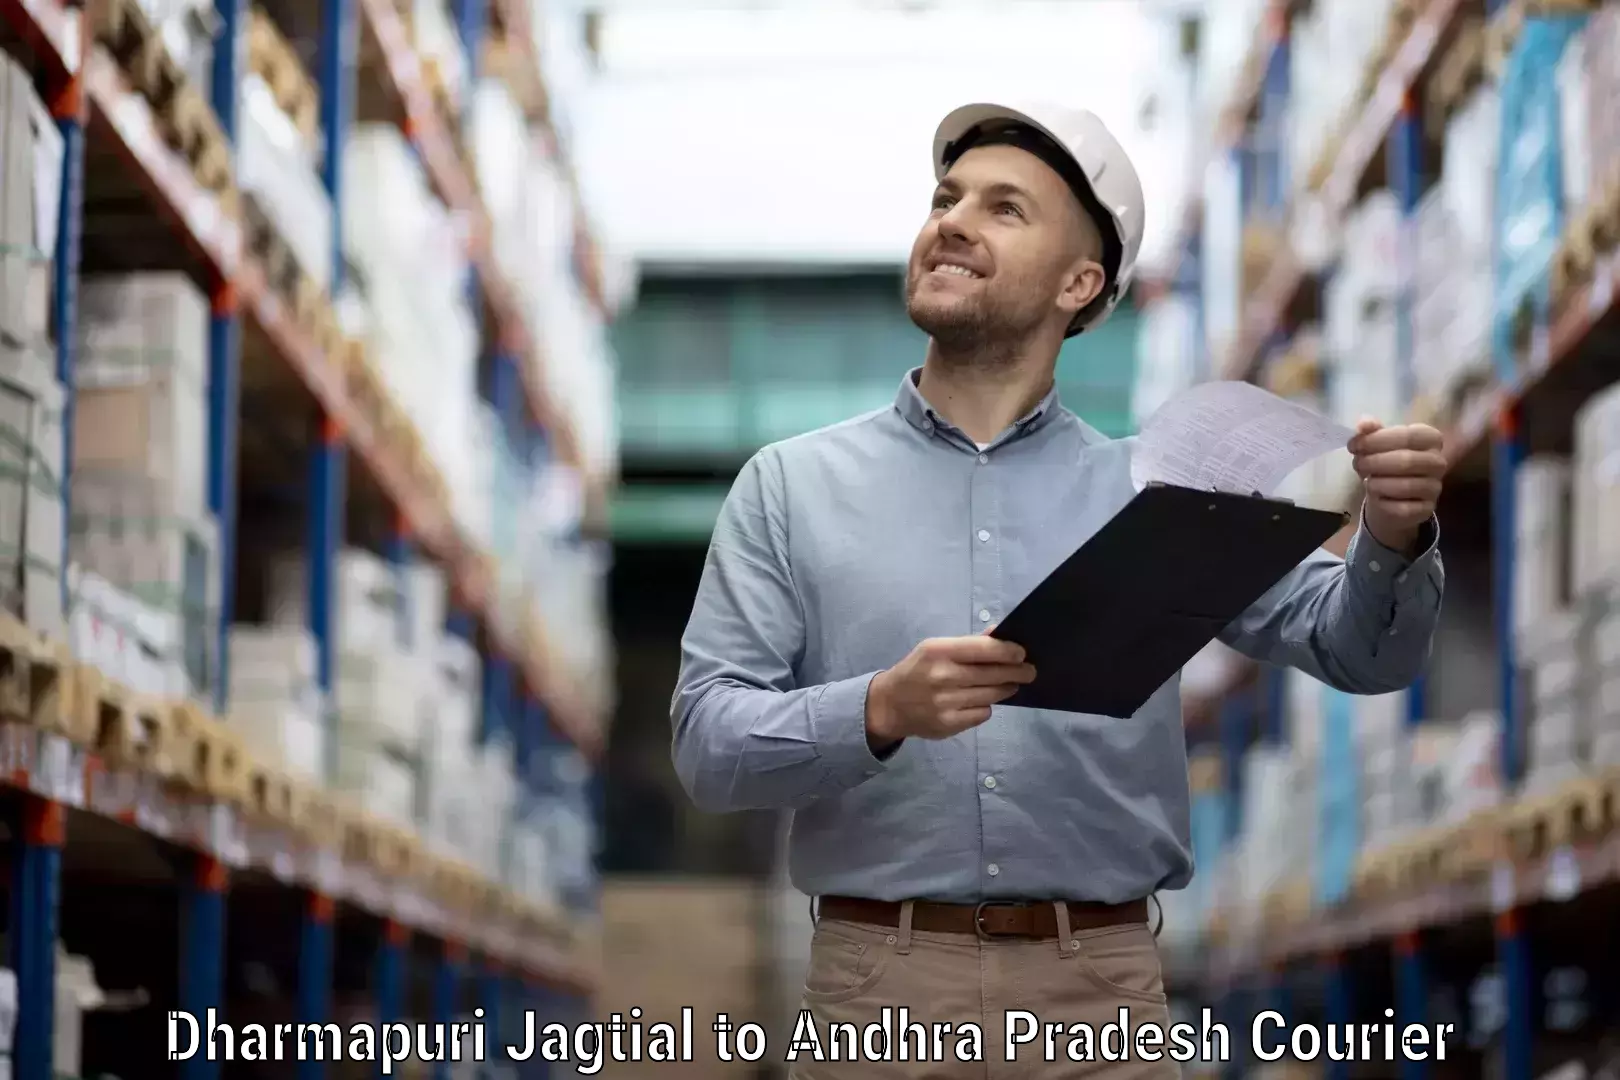 State-of-the-art courier technology Dharmapuri Jagtial to Amalapuram